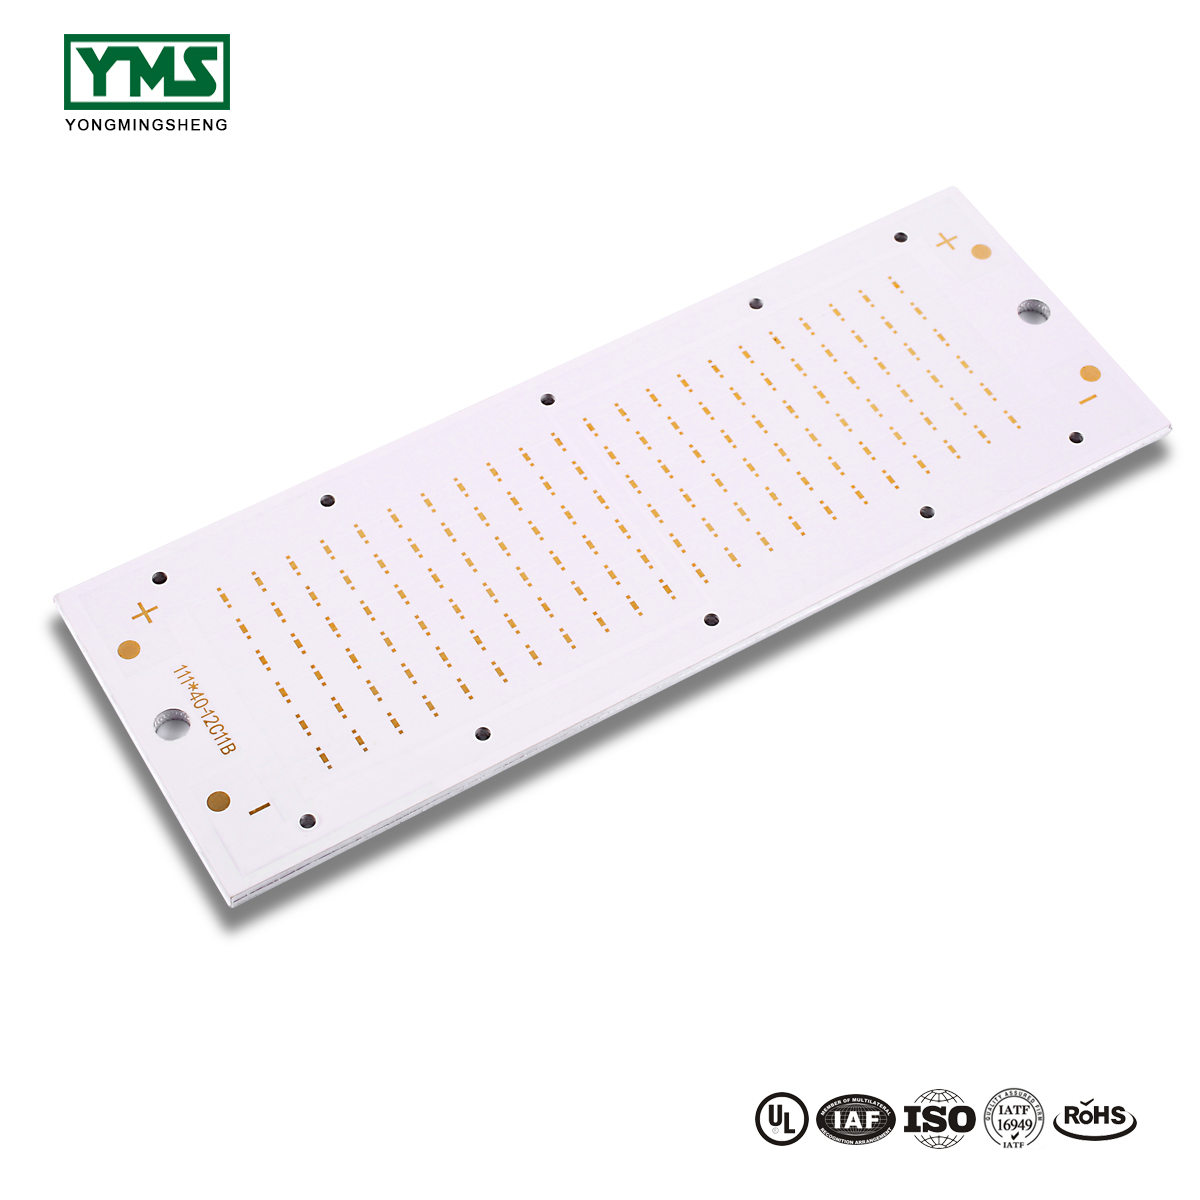 OEM Manufacturer Ultra-Thin Lcd Pcb – 1Layer Aluminum base Board | YMSPCB – Yongmingsheng